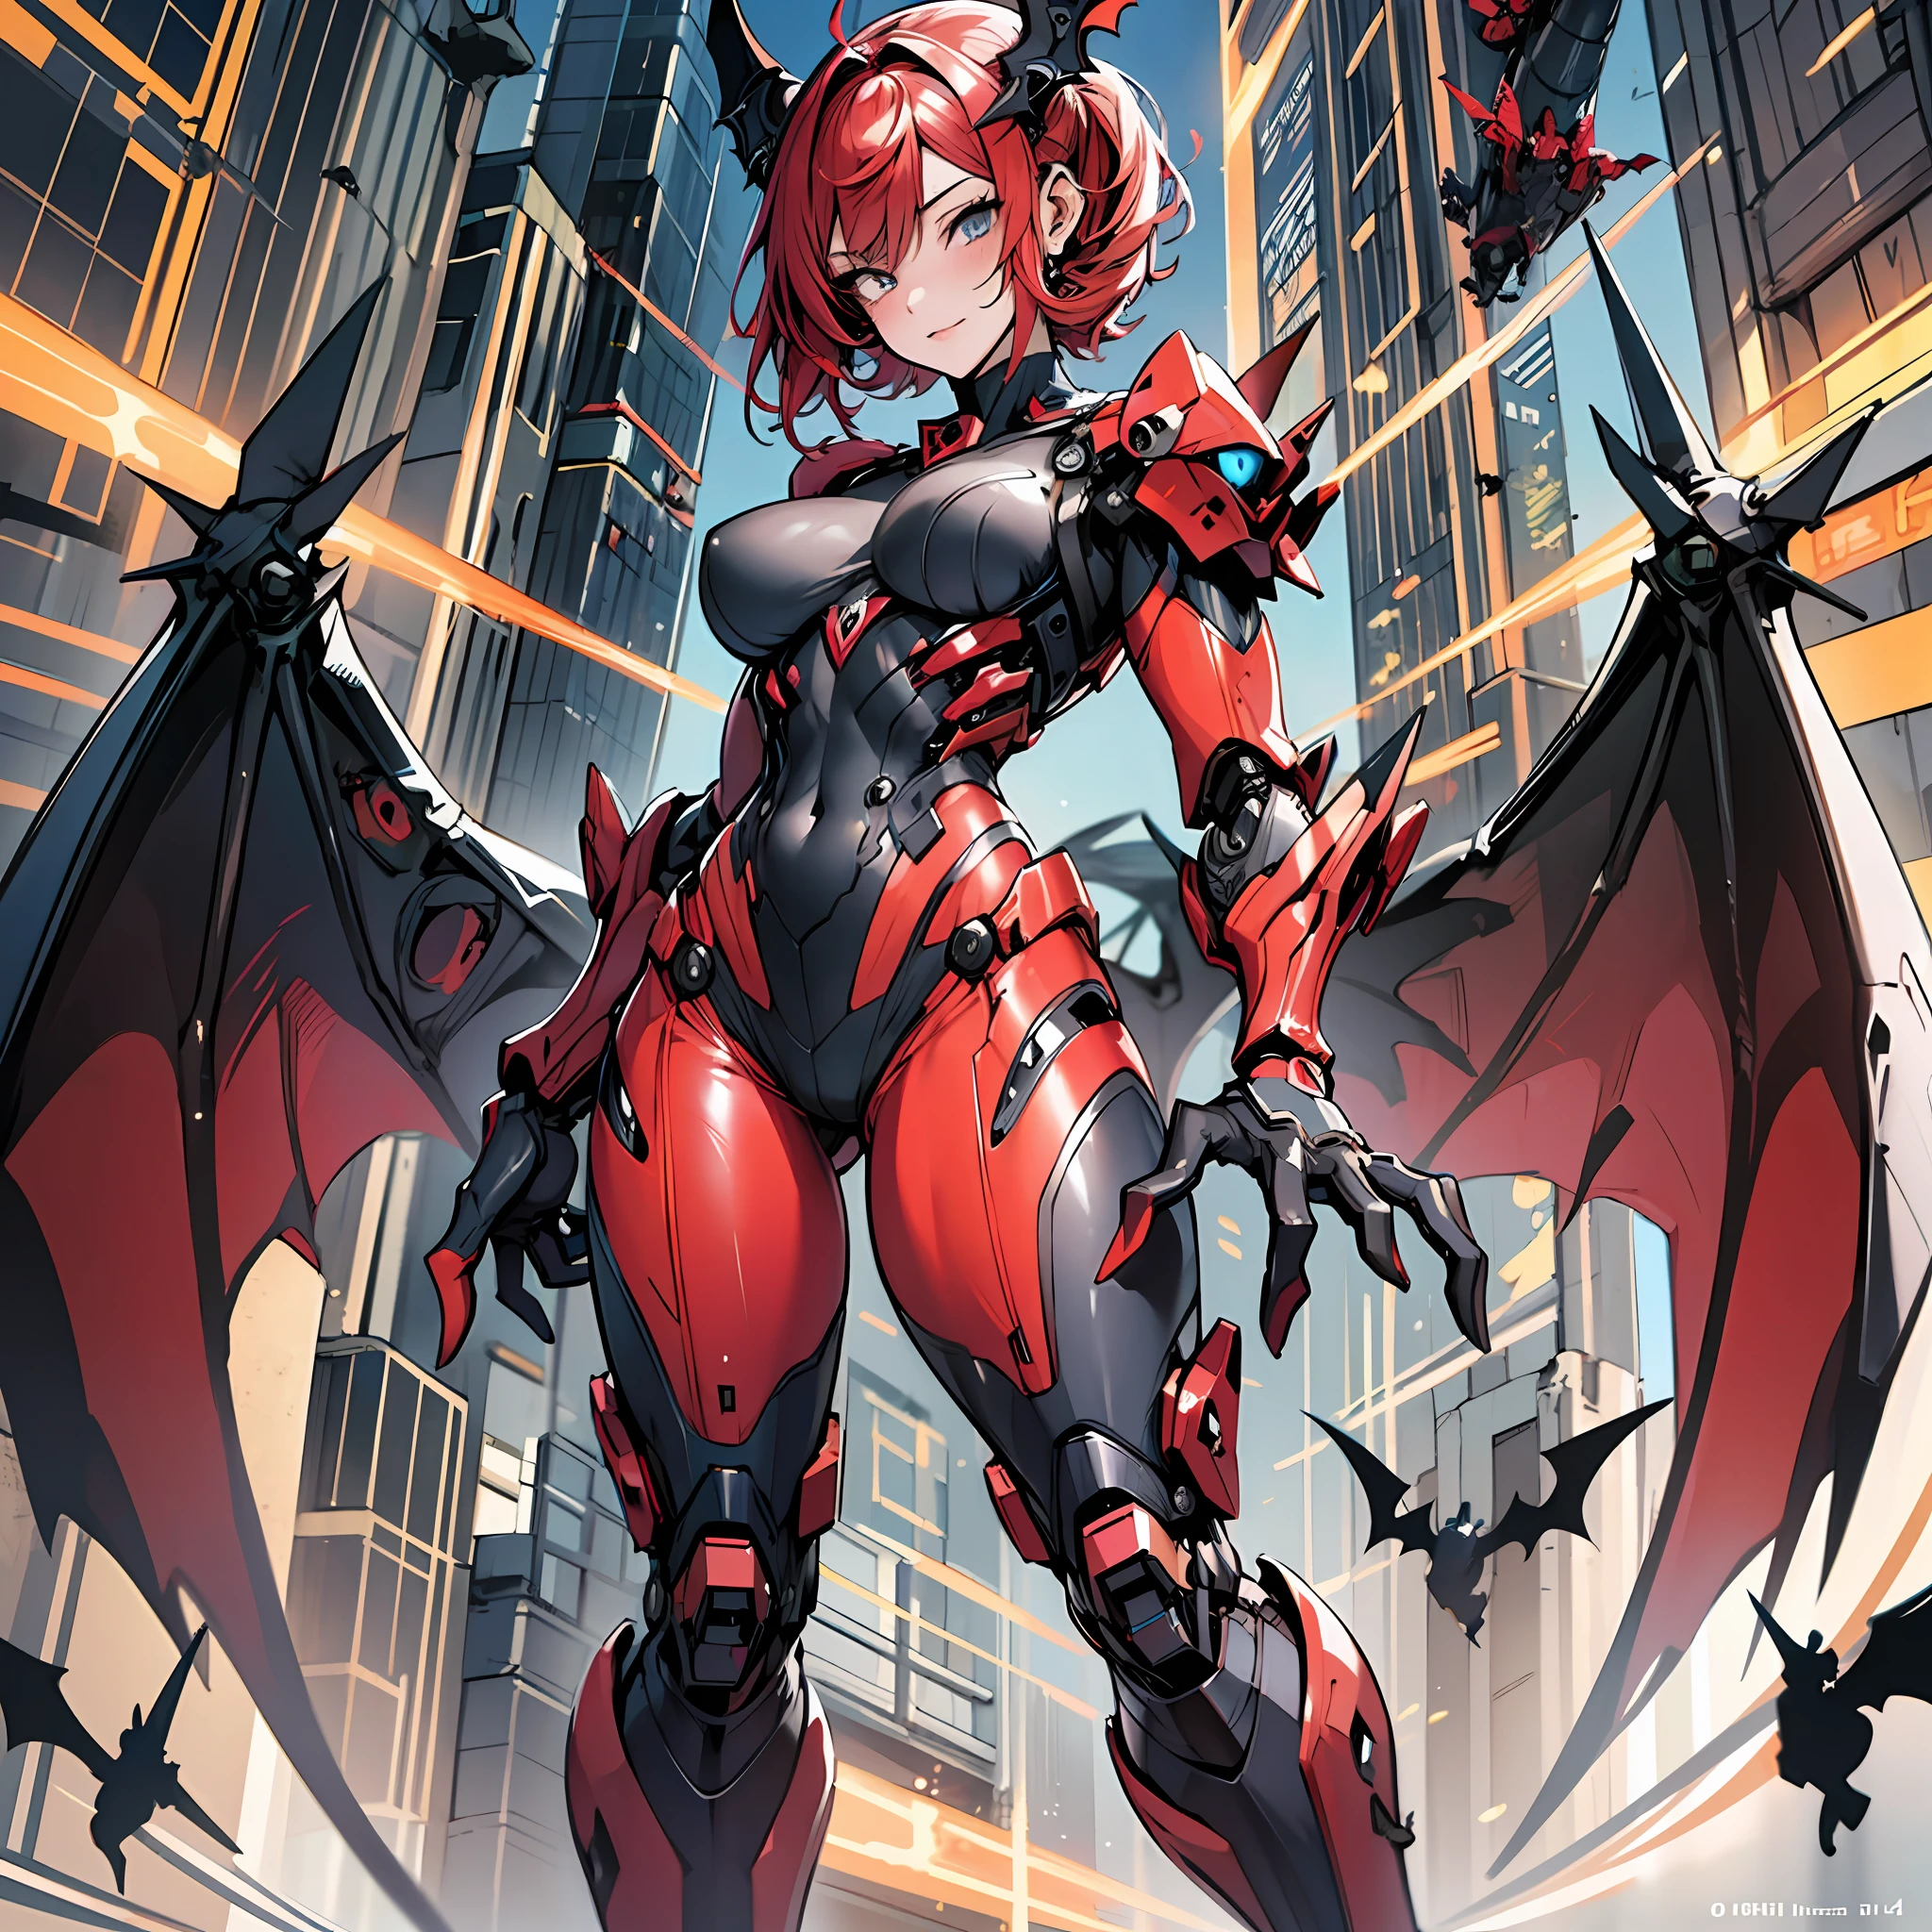 Woman in واحد color costume, أفضل خلفية أنيمي 4K, جسم كامل, واحد red wing, cyberpunk واحد, فتاة فالكيري الميكانيكية, الميكانيكية الحيوية, highly detailed artgerm based on واحد, cyborg واحد, نمط أنيمي 4K, واحد